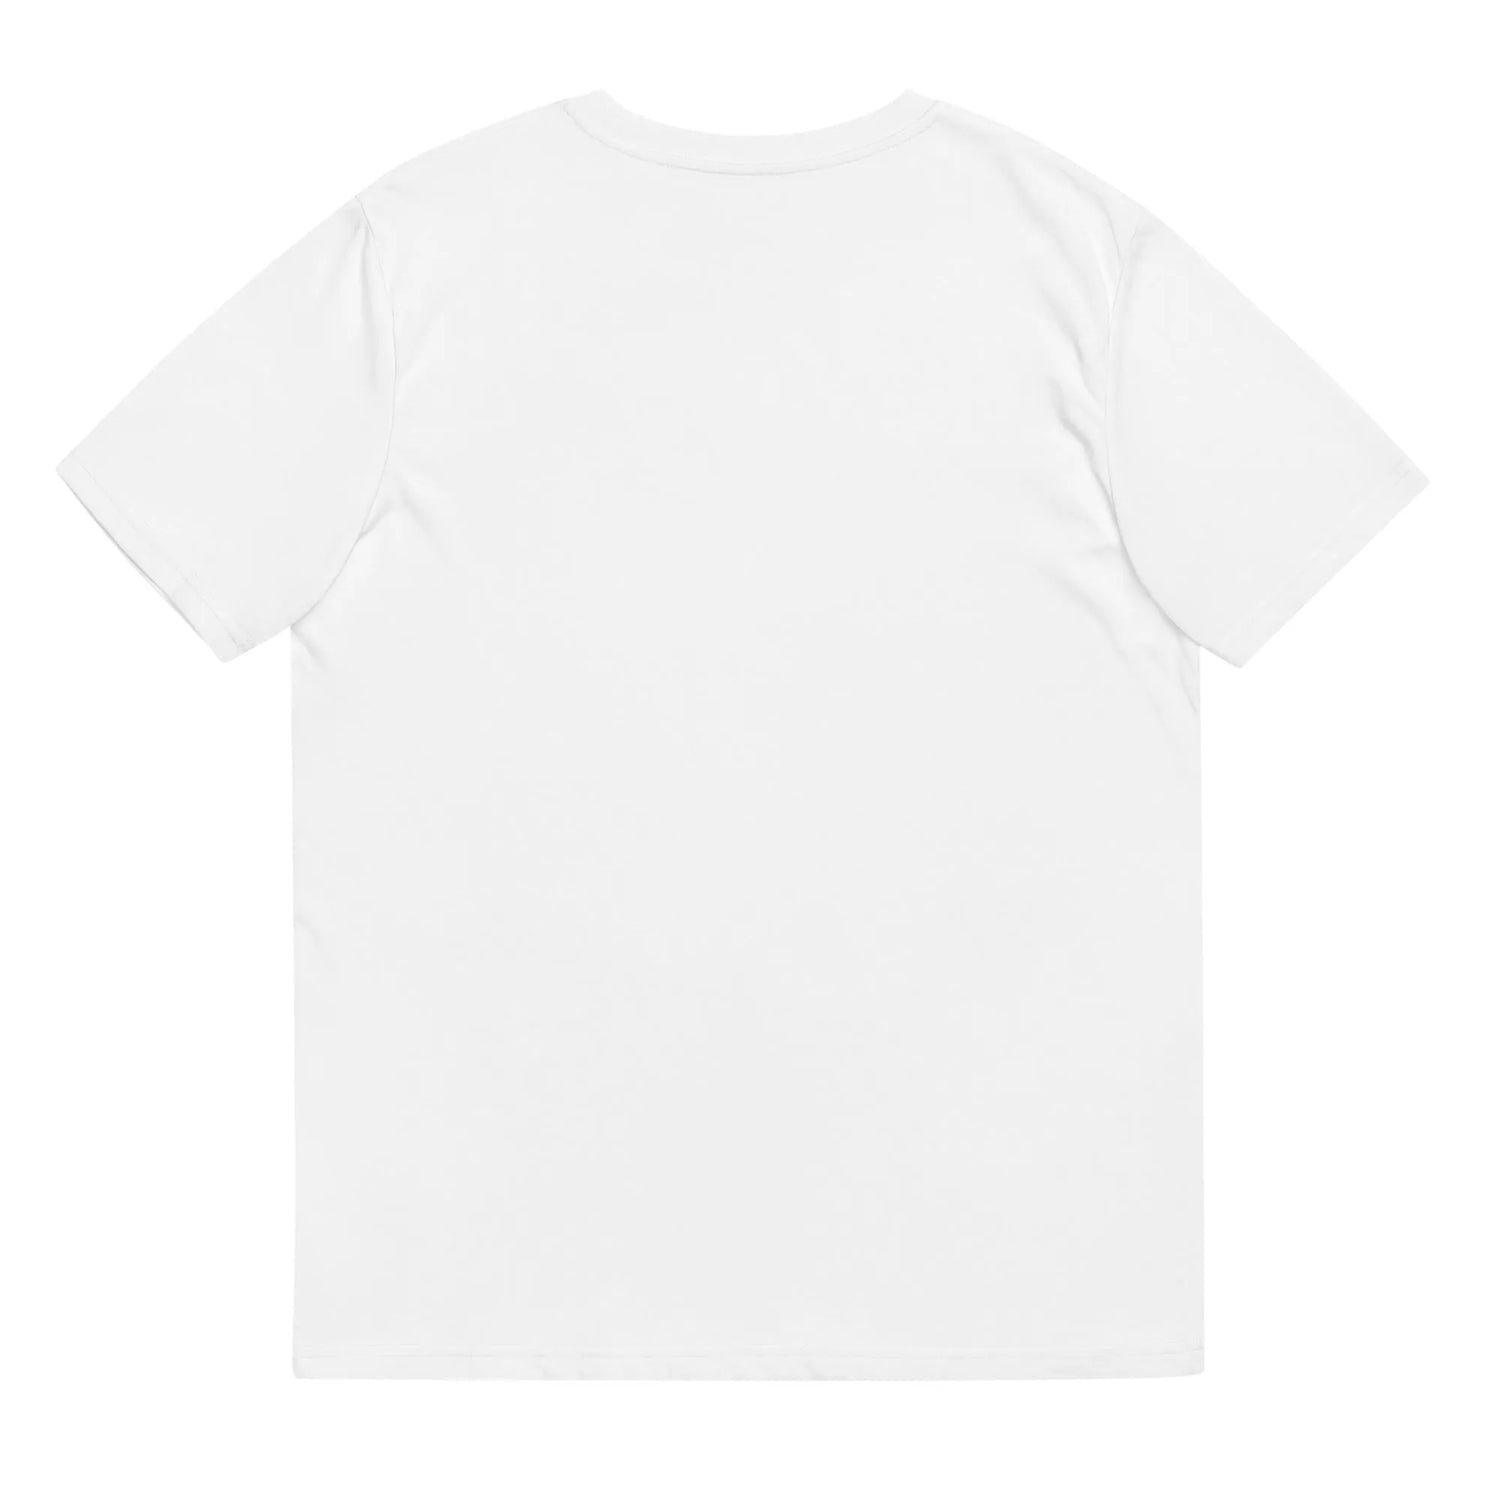 Herren Bio-Baumwoll T-Shirt WINGS (Weiß)